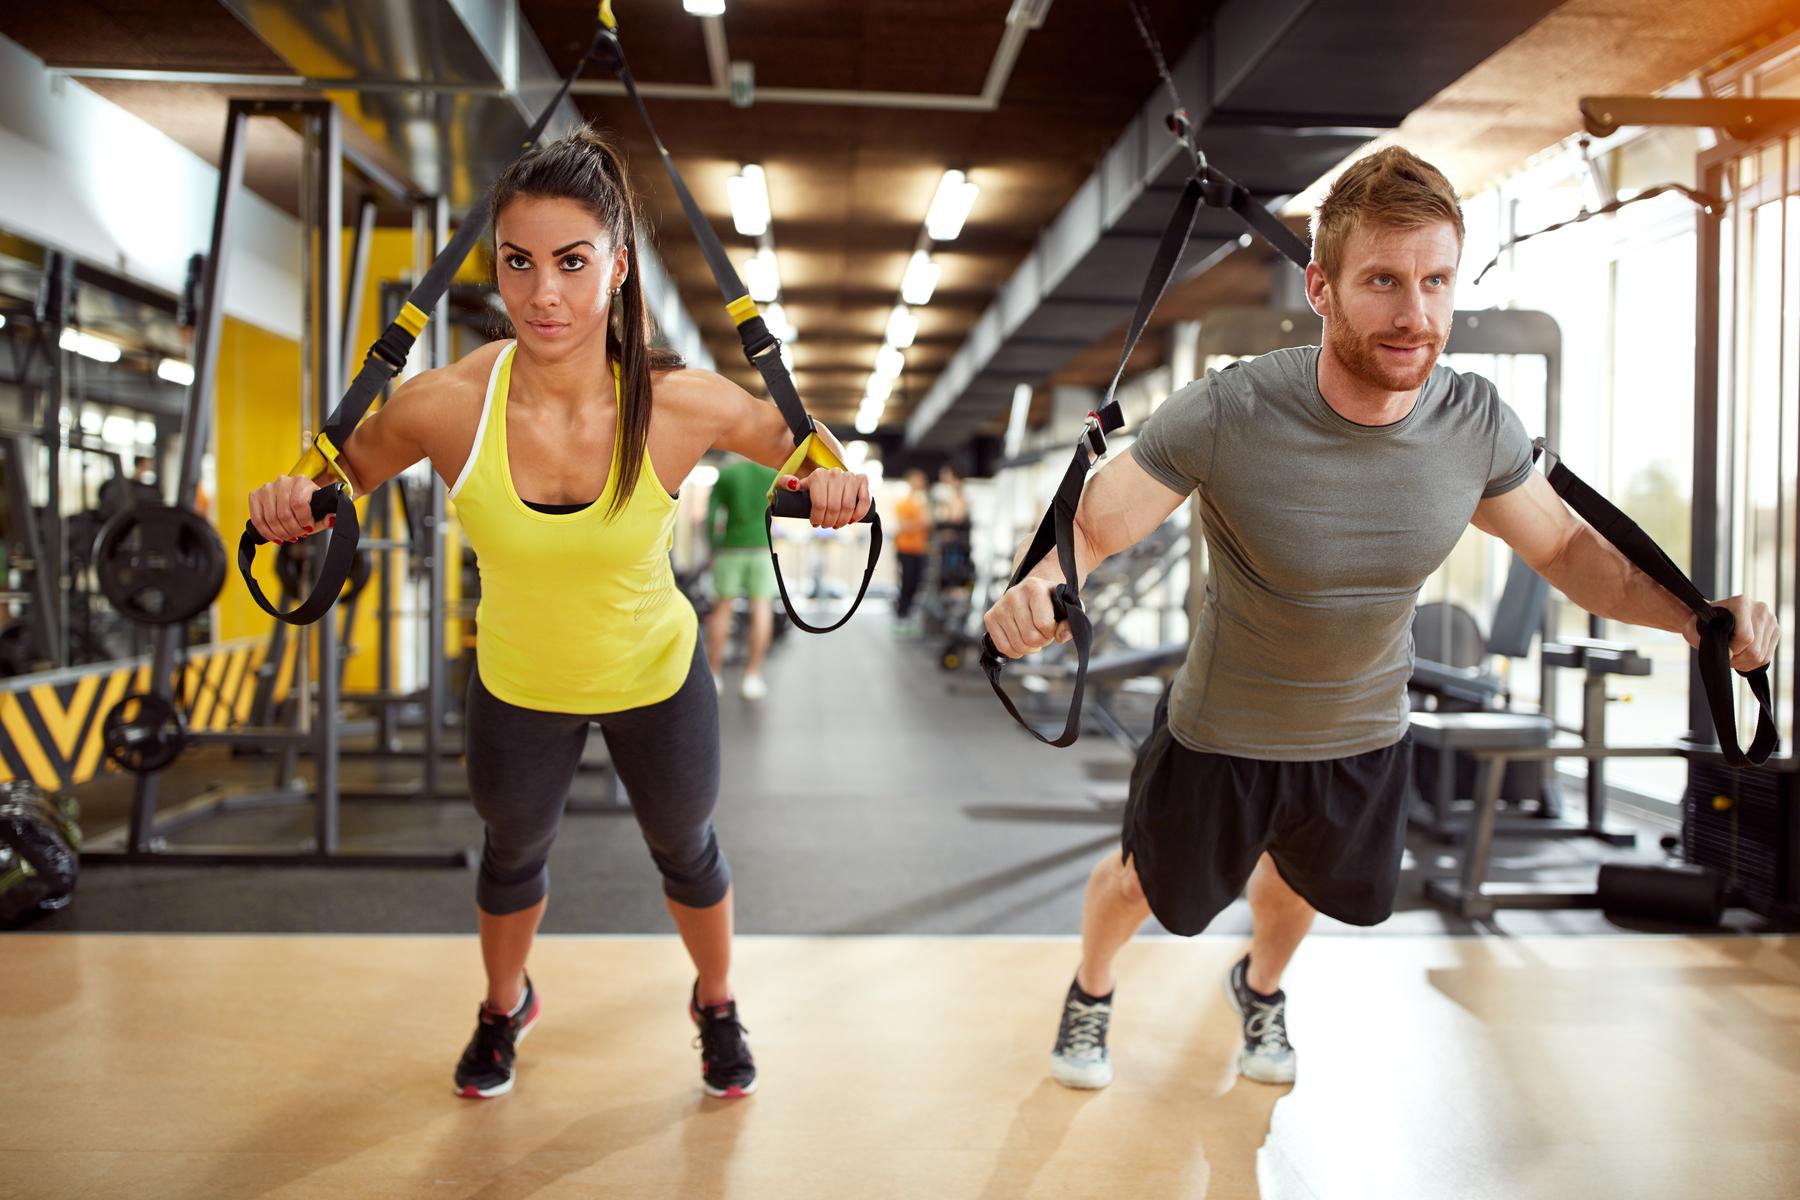 TRX Exercises: Top 11 TRX Workout Exercises TRX Moves, 50% OFF